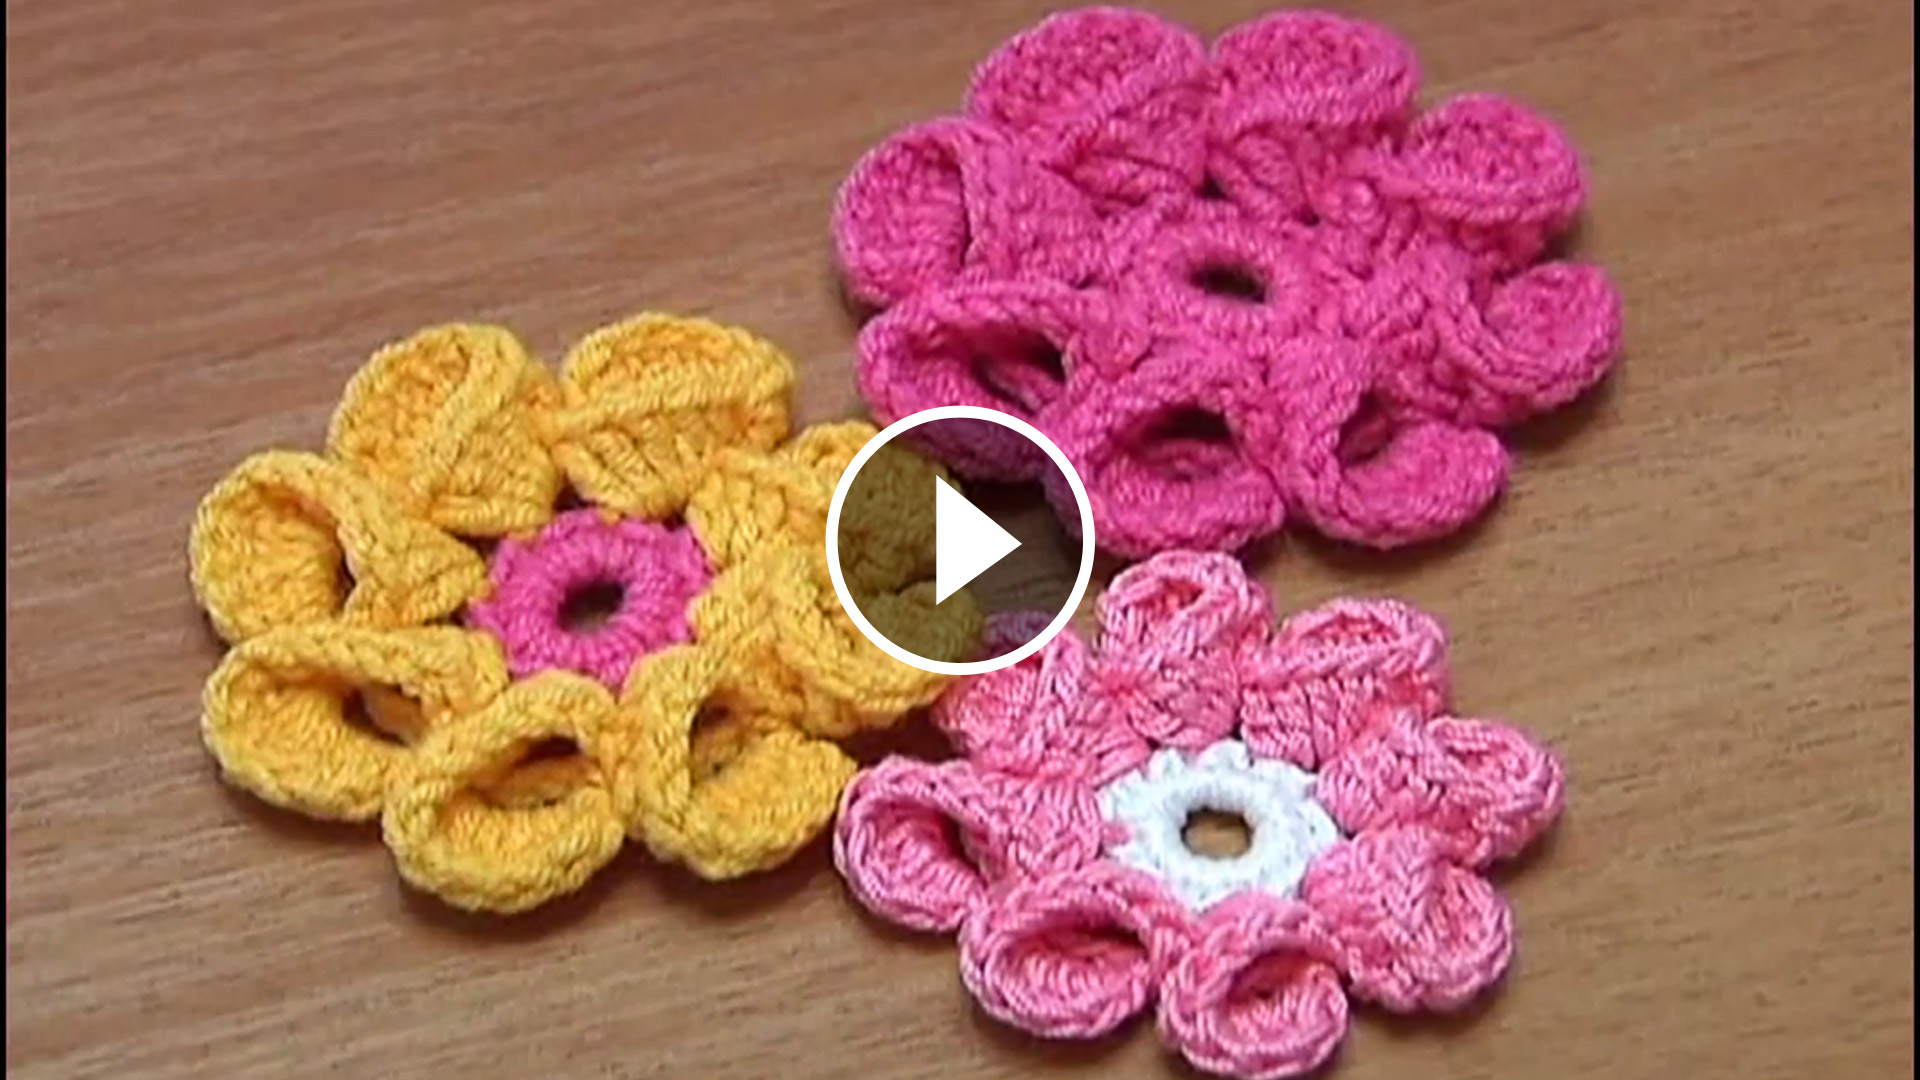 8 Petals Crochet Flowers Featured Image